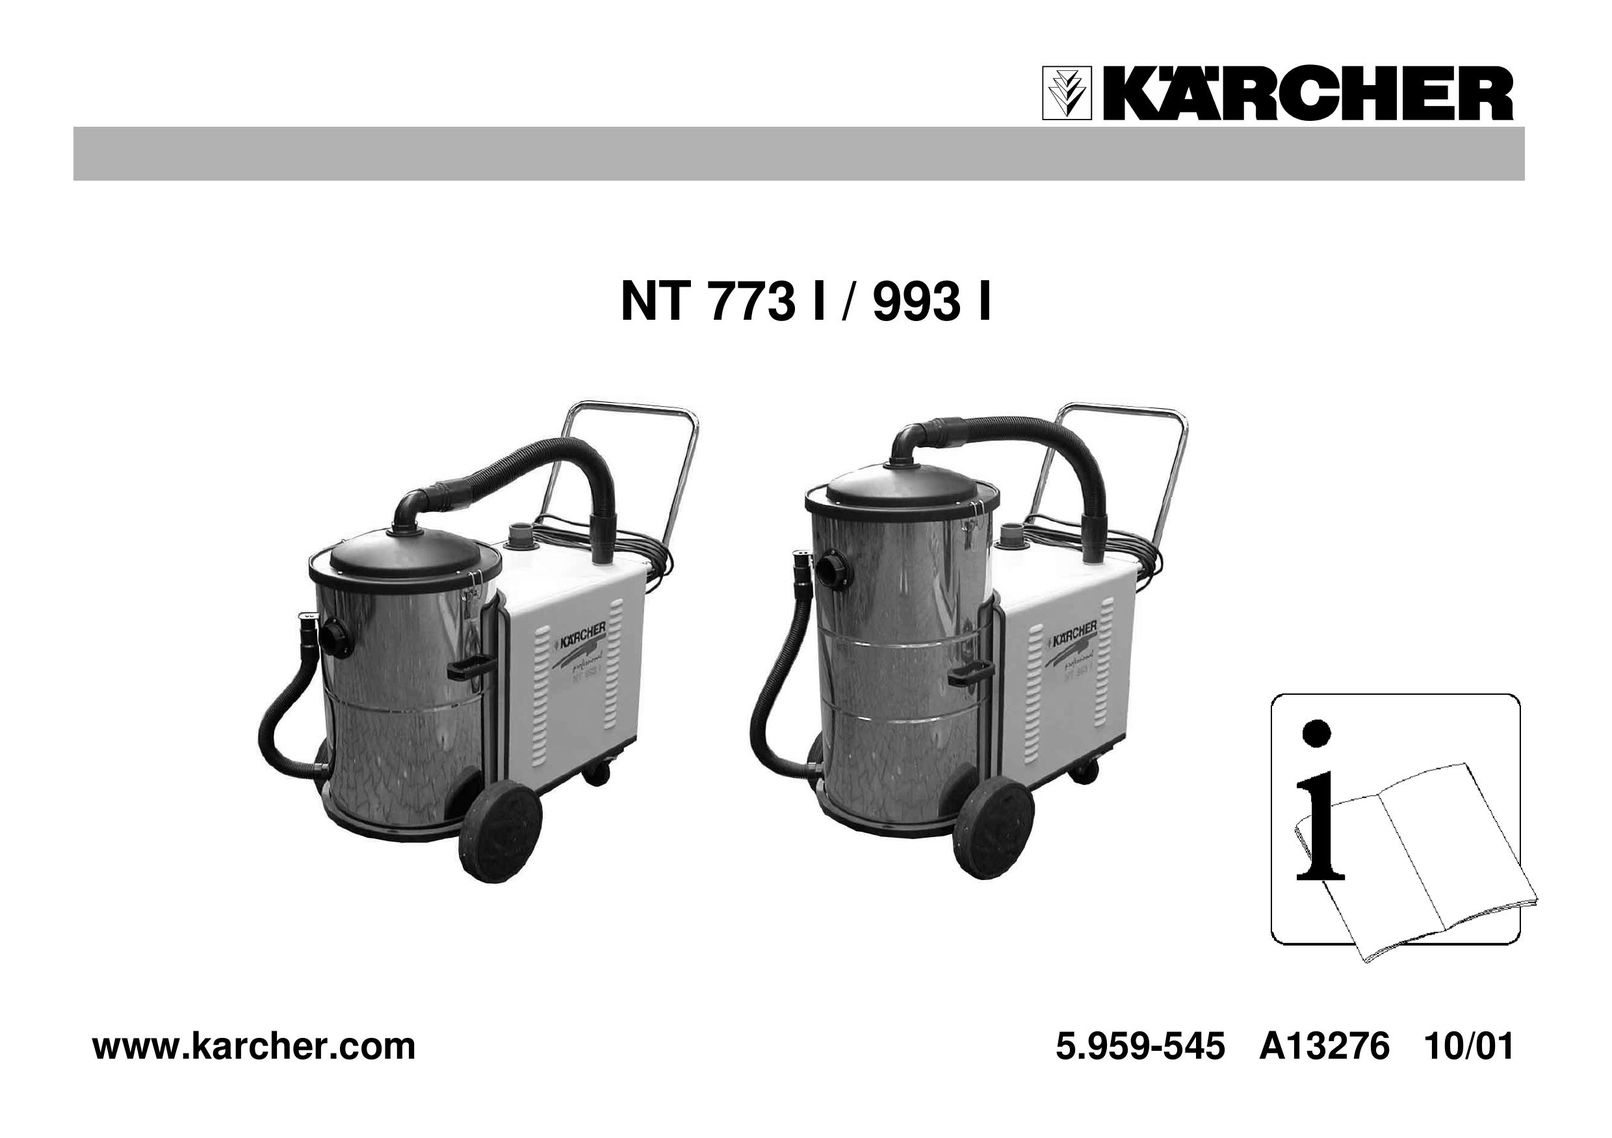 Karcher NT 773 I Vacuum Cleaner User Manual